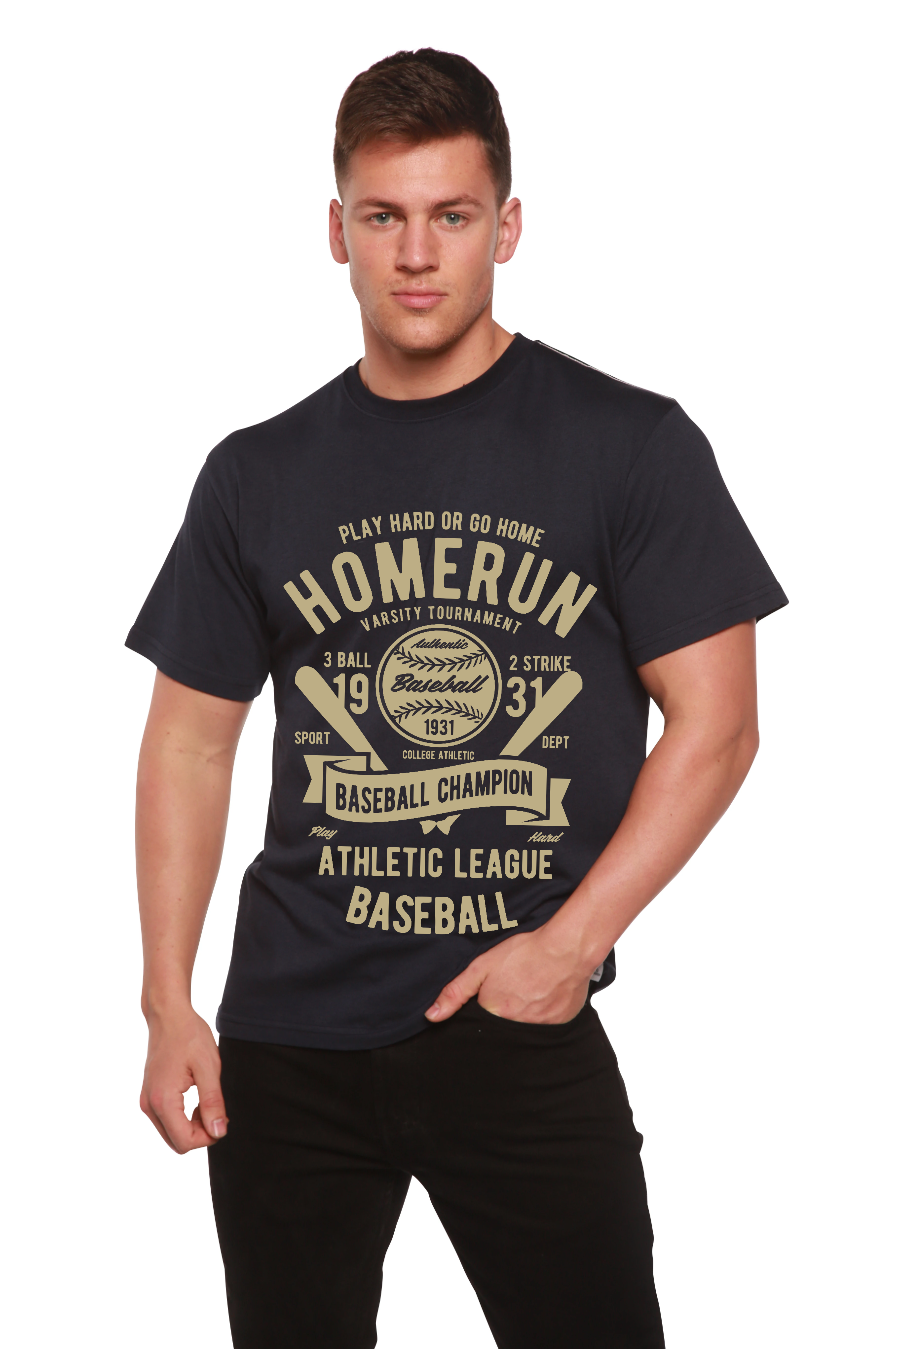 Homerun Baseball Men's Bamboo Viscose/Organic Cotton Short Sleeve T-Shirt - Spun Bamboo